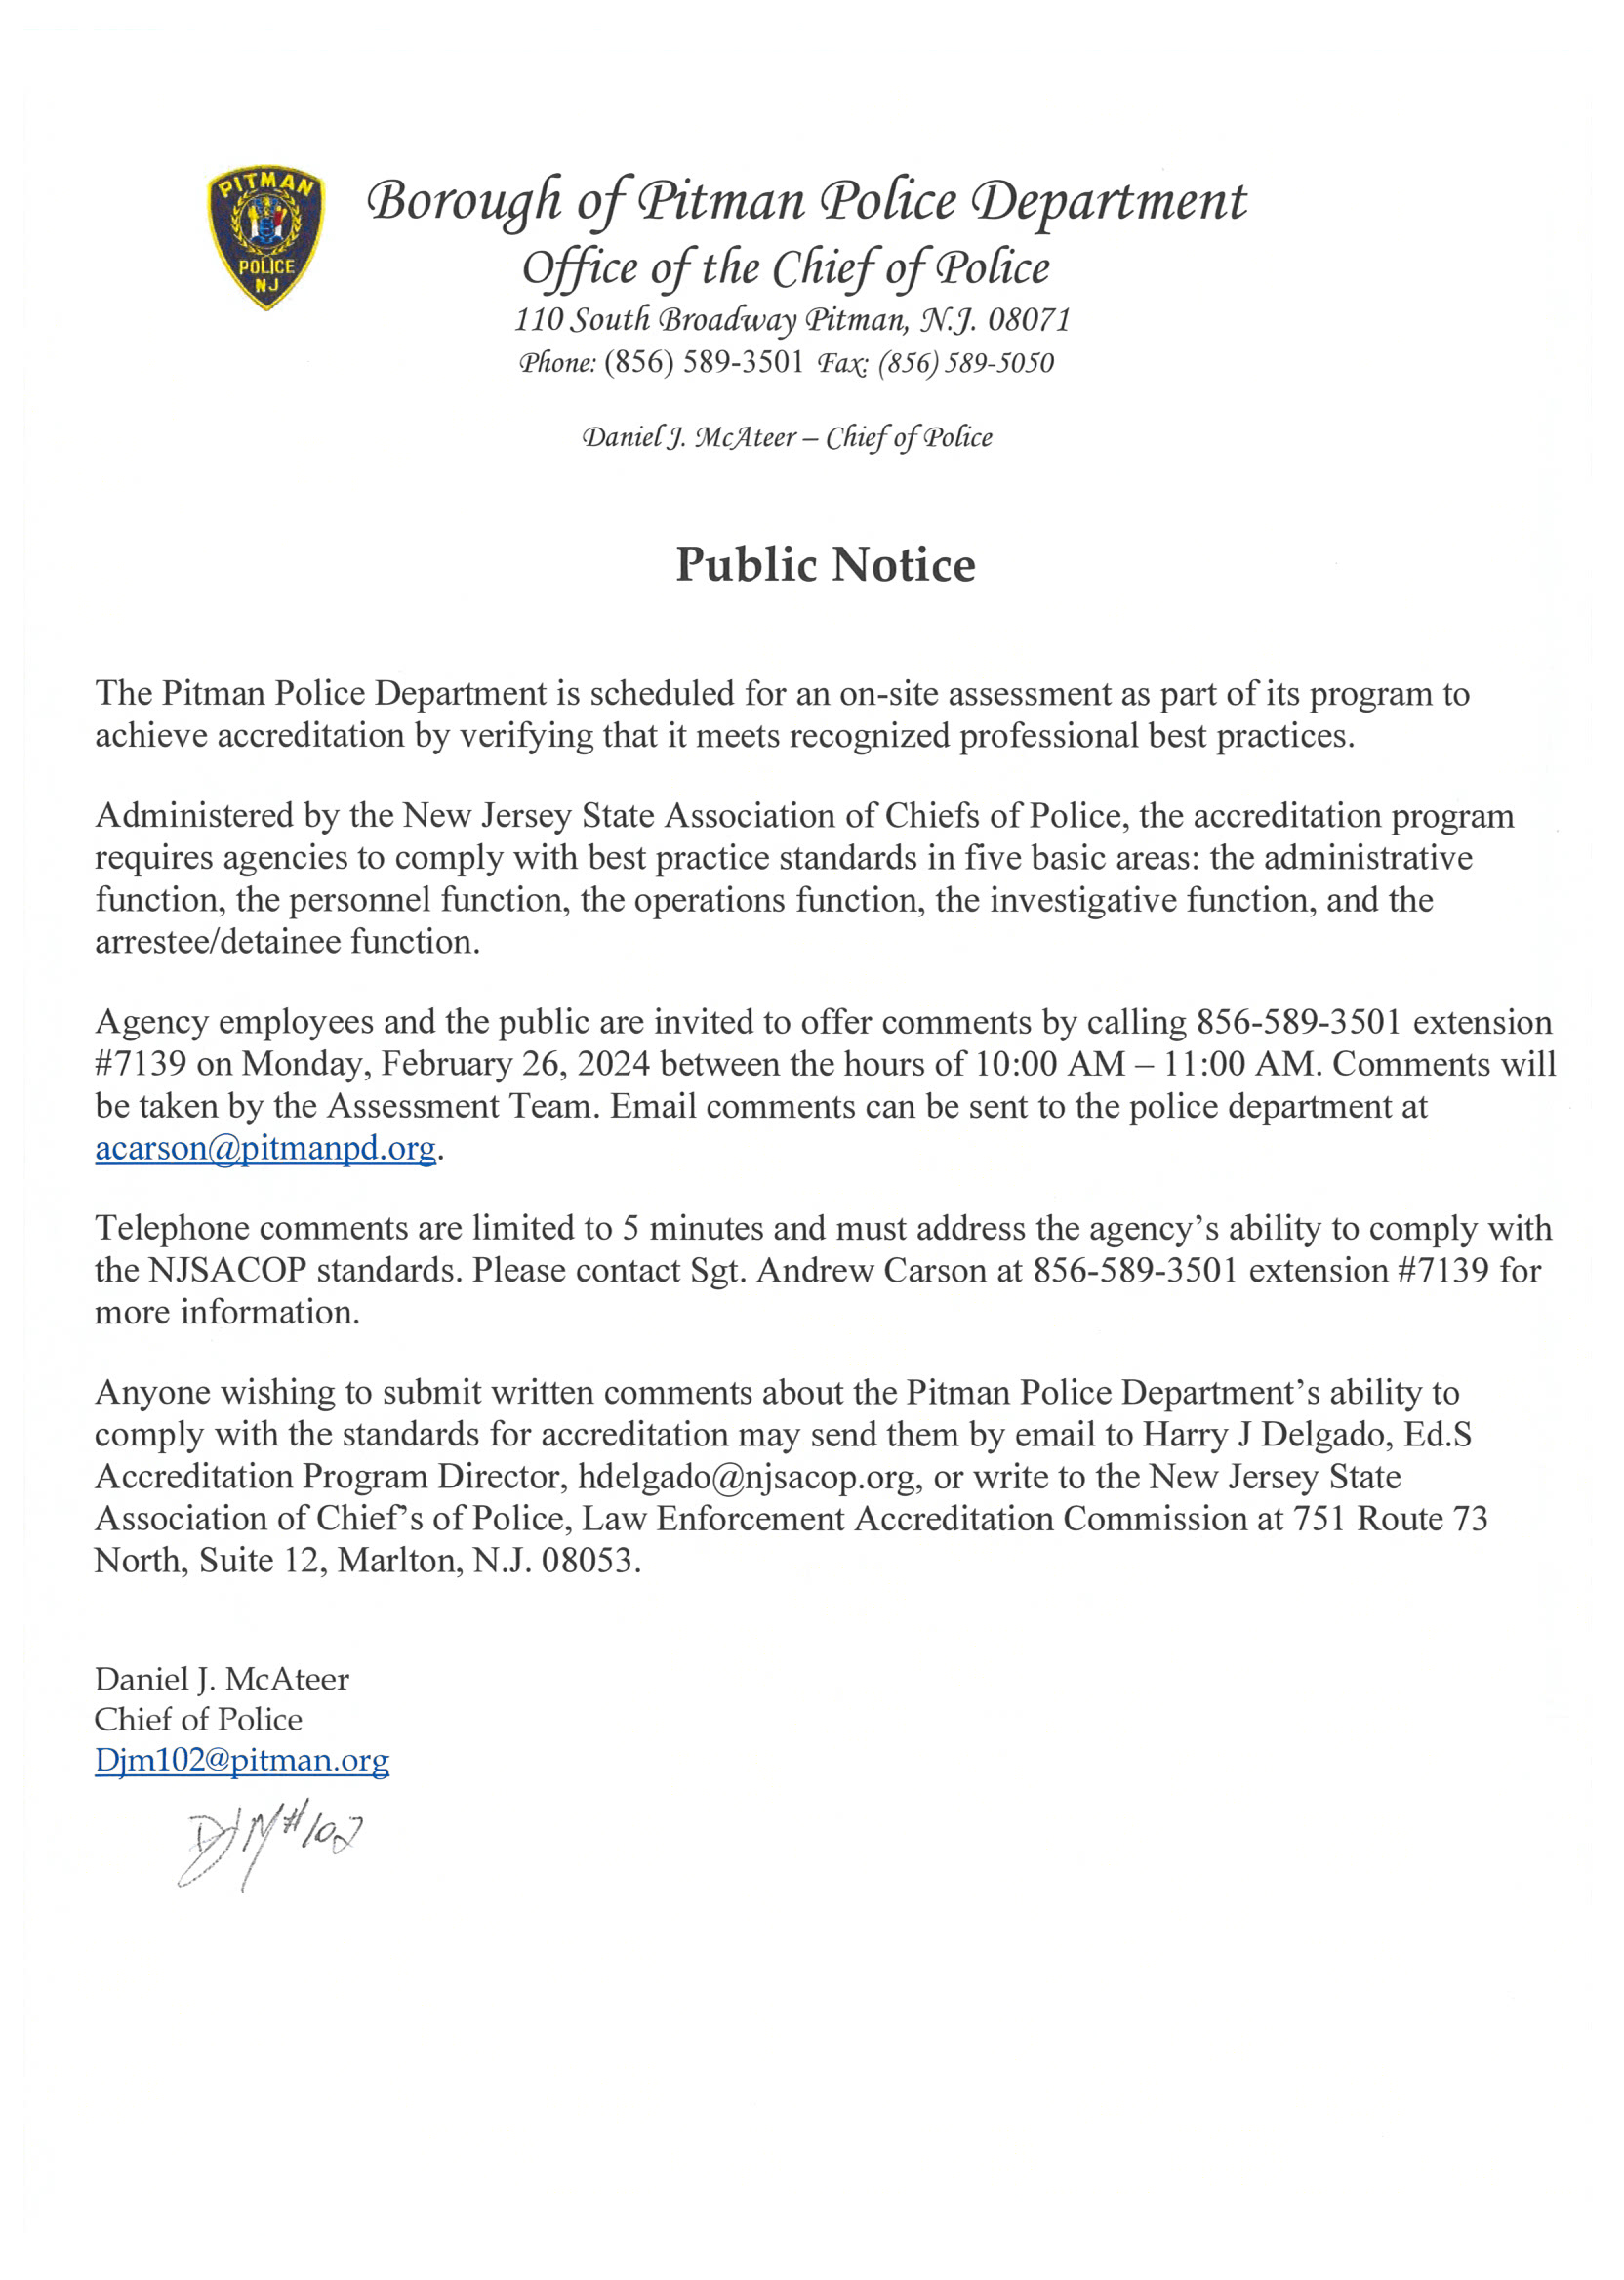 PPD Accreditation Public Notice FB